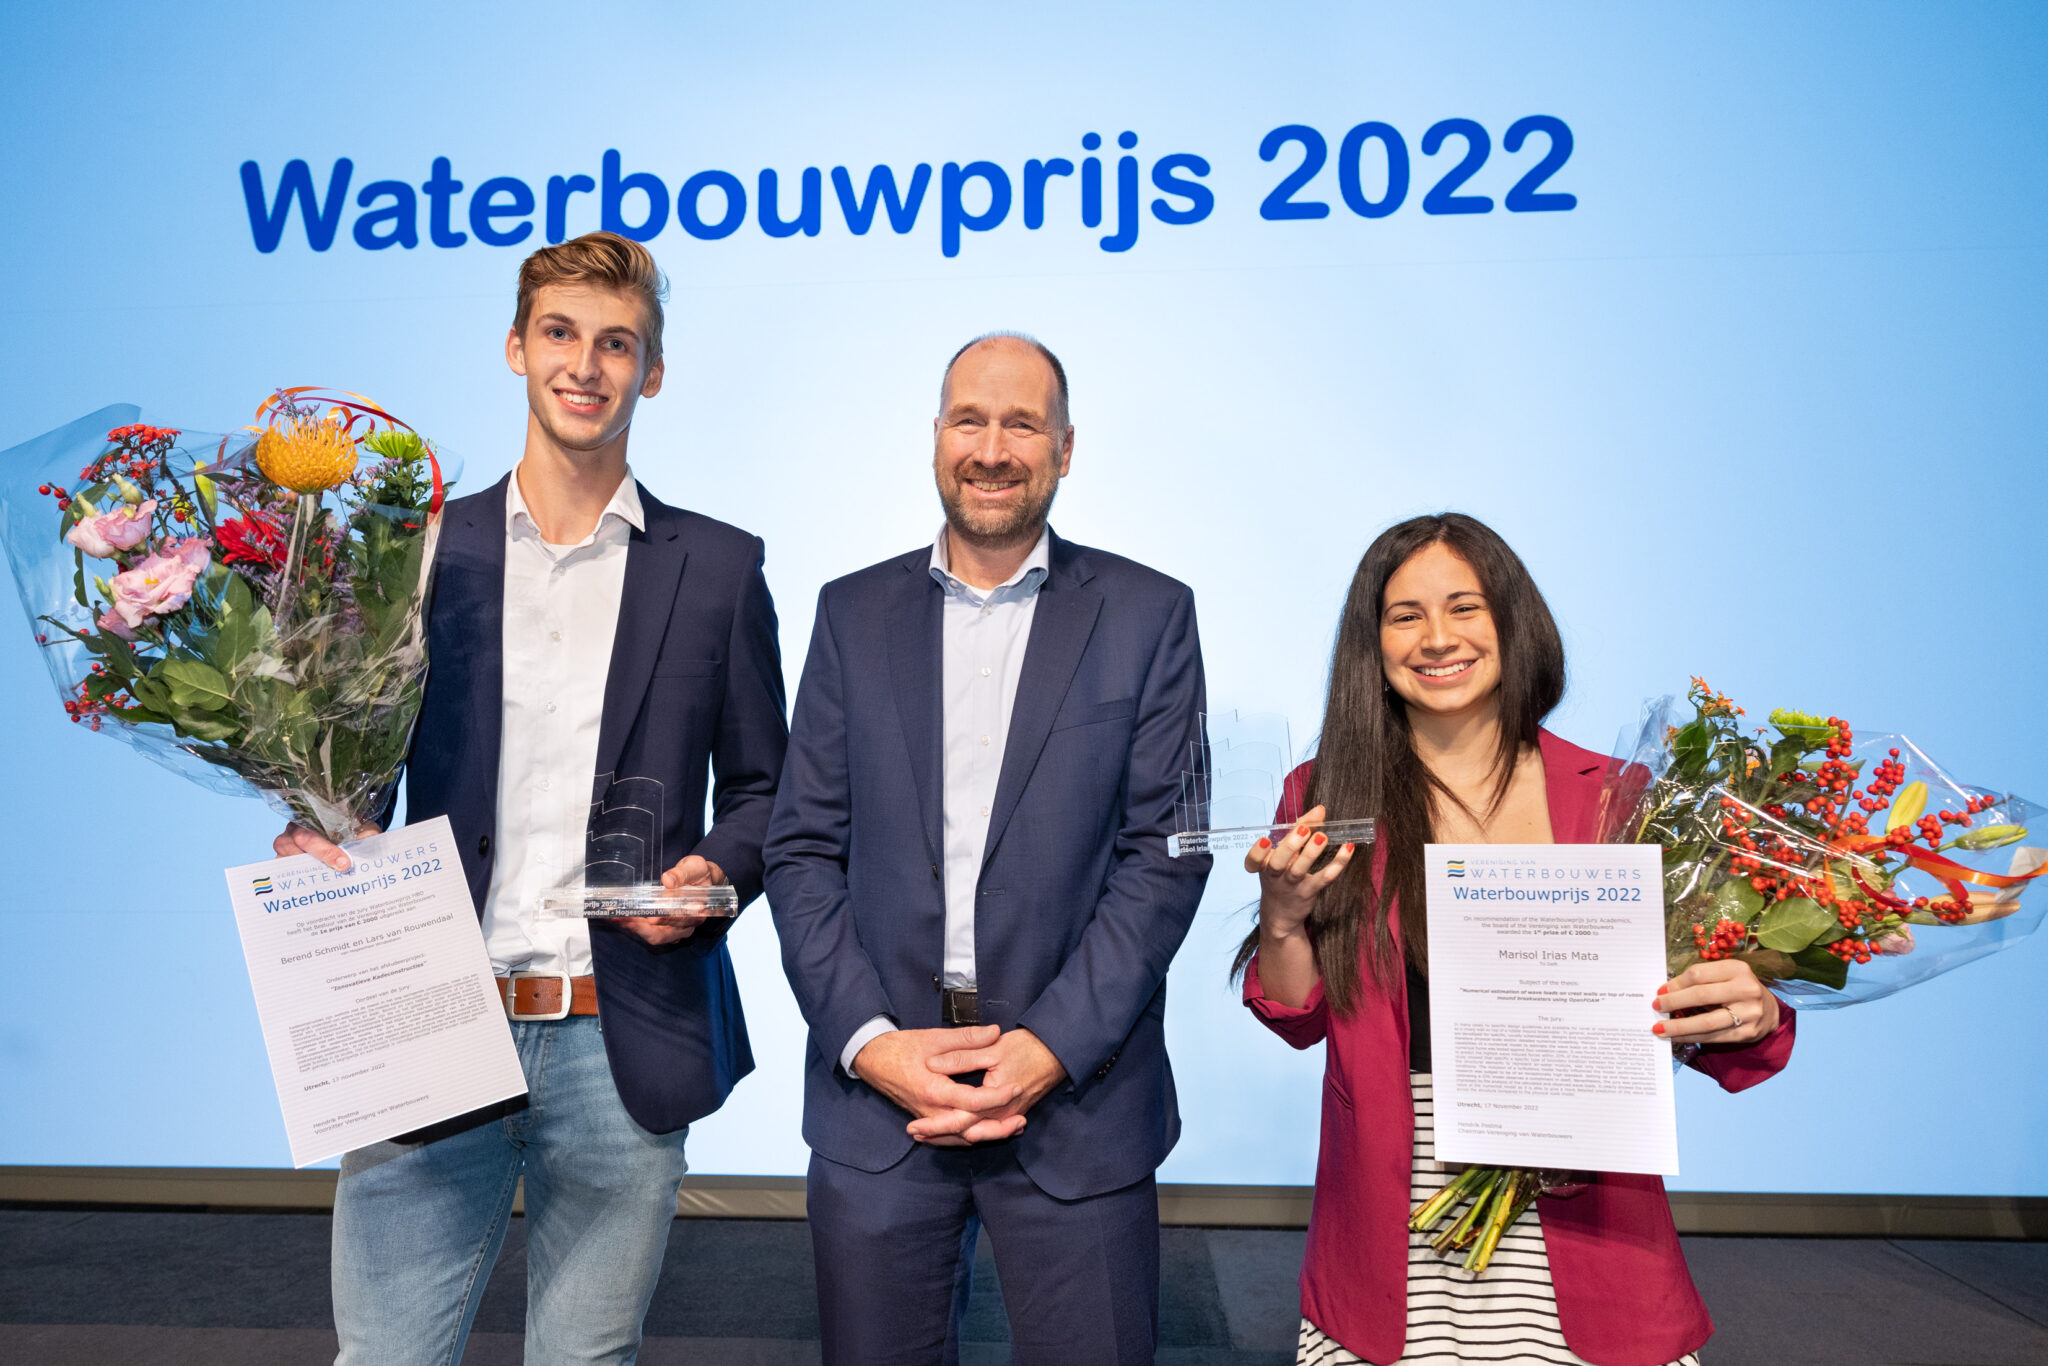 Winnaars Waterbouwprijs 2022 bekend